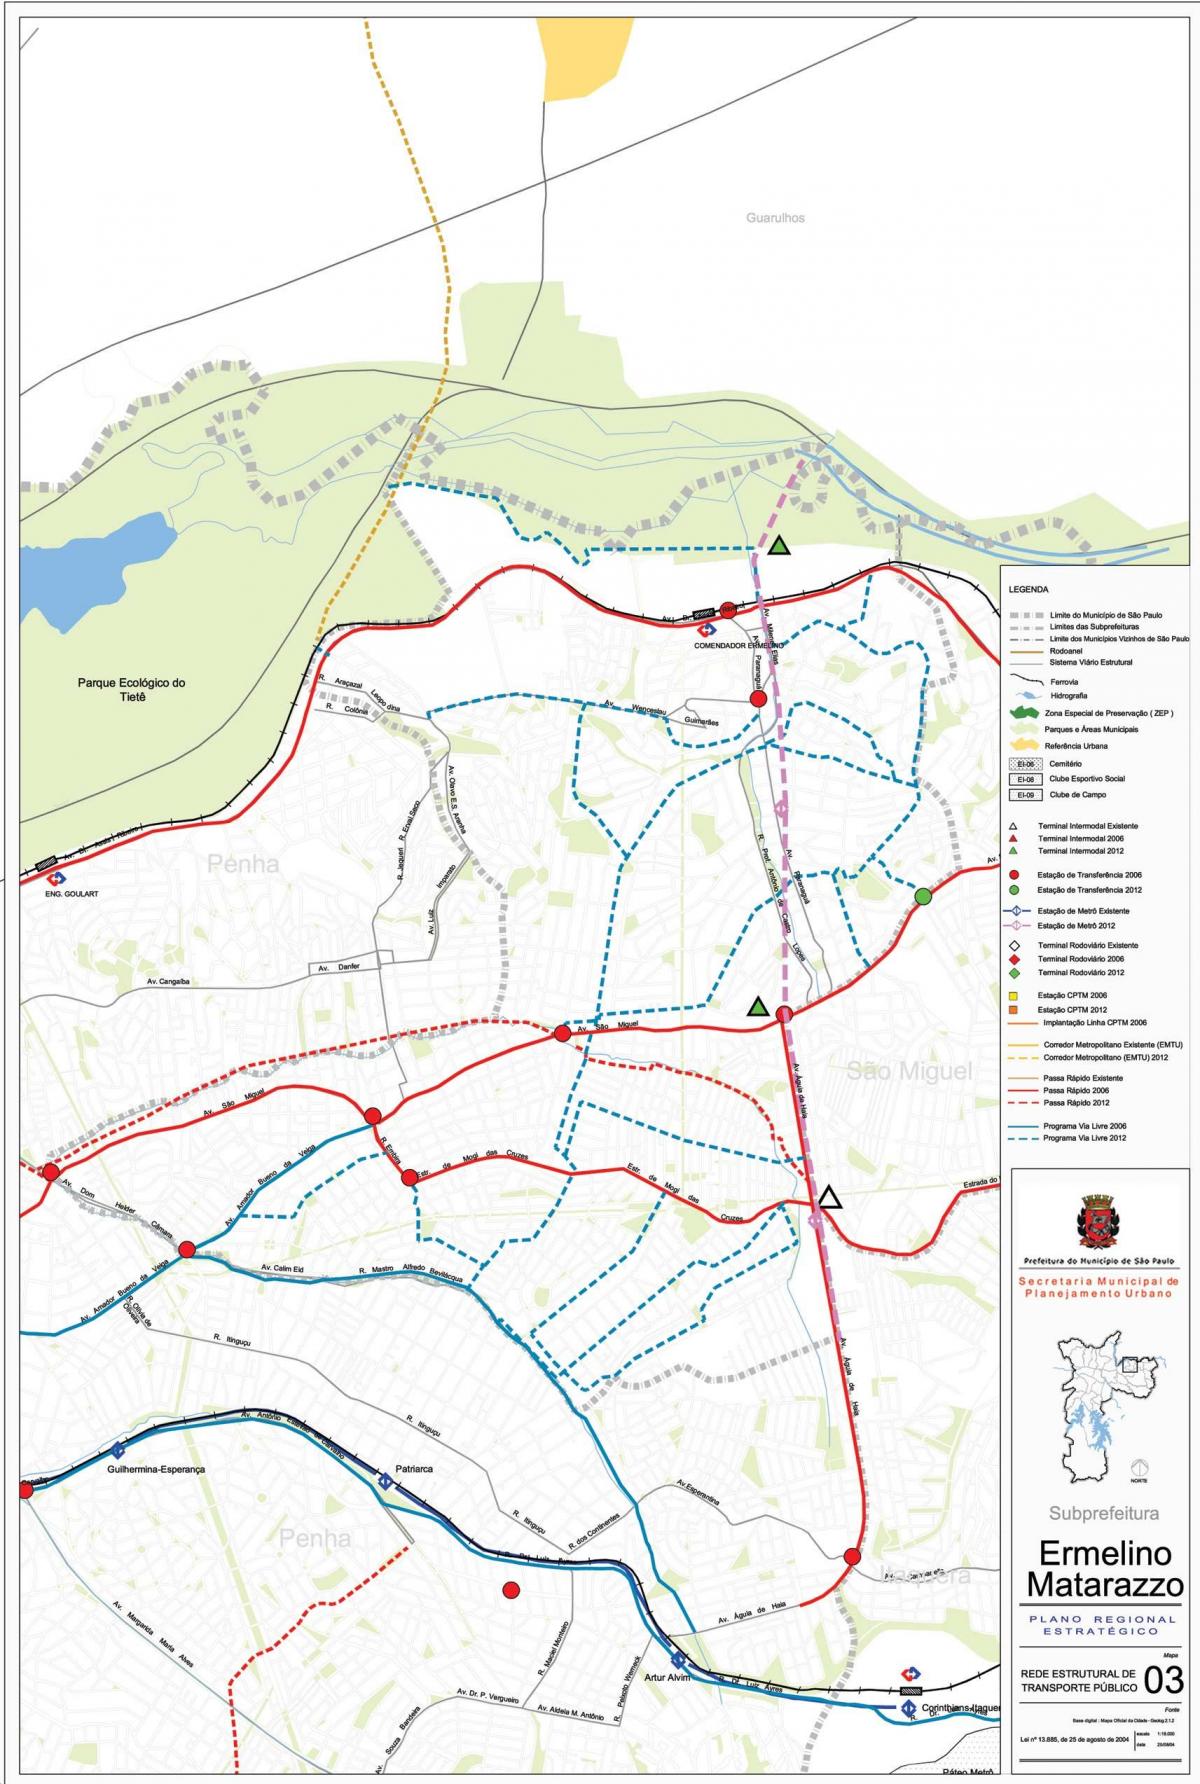 Mapa de Ermelino Matarazzo Galicia - Público de transportes